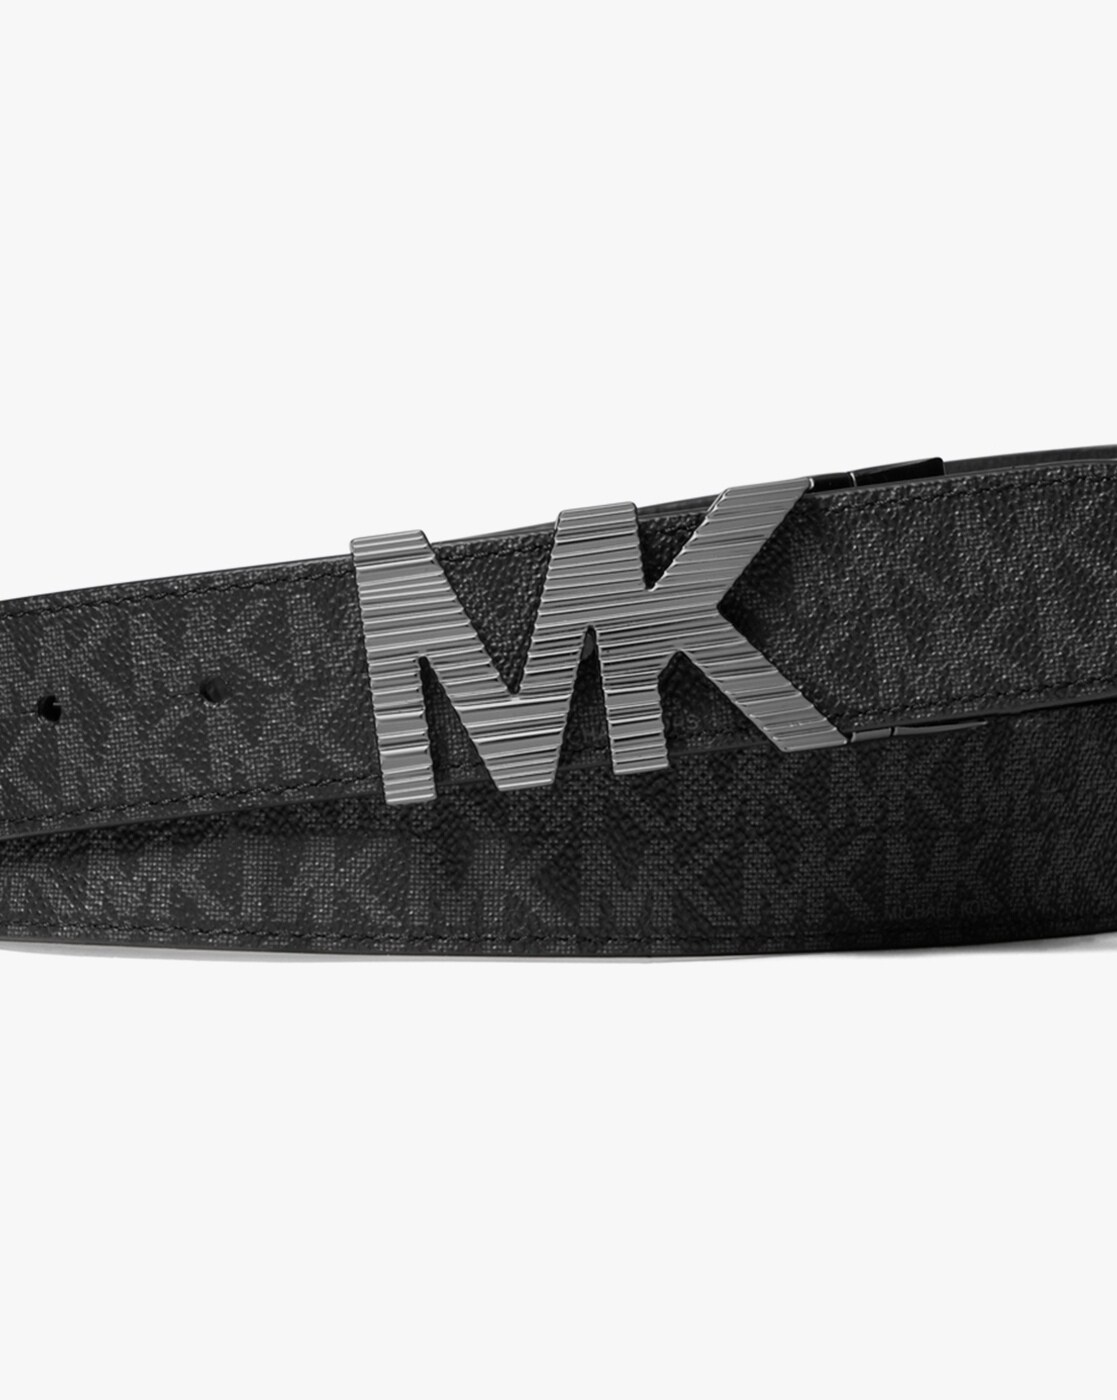 MICHAEL KORS Mens Cut to Fit Reversible Leather MK Plaque Belt 1 week  ship